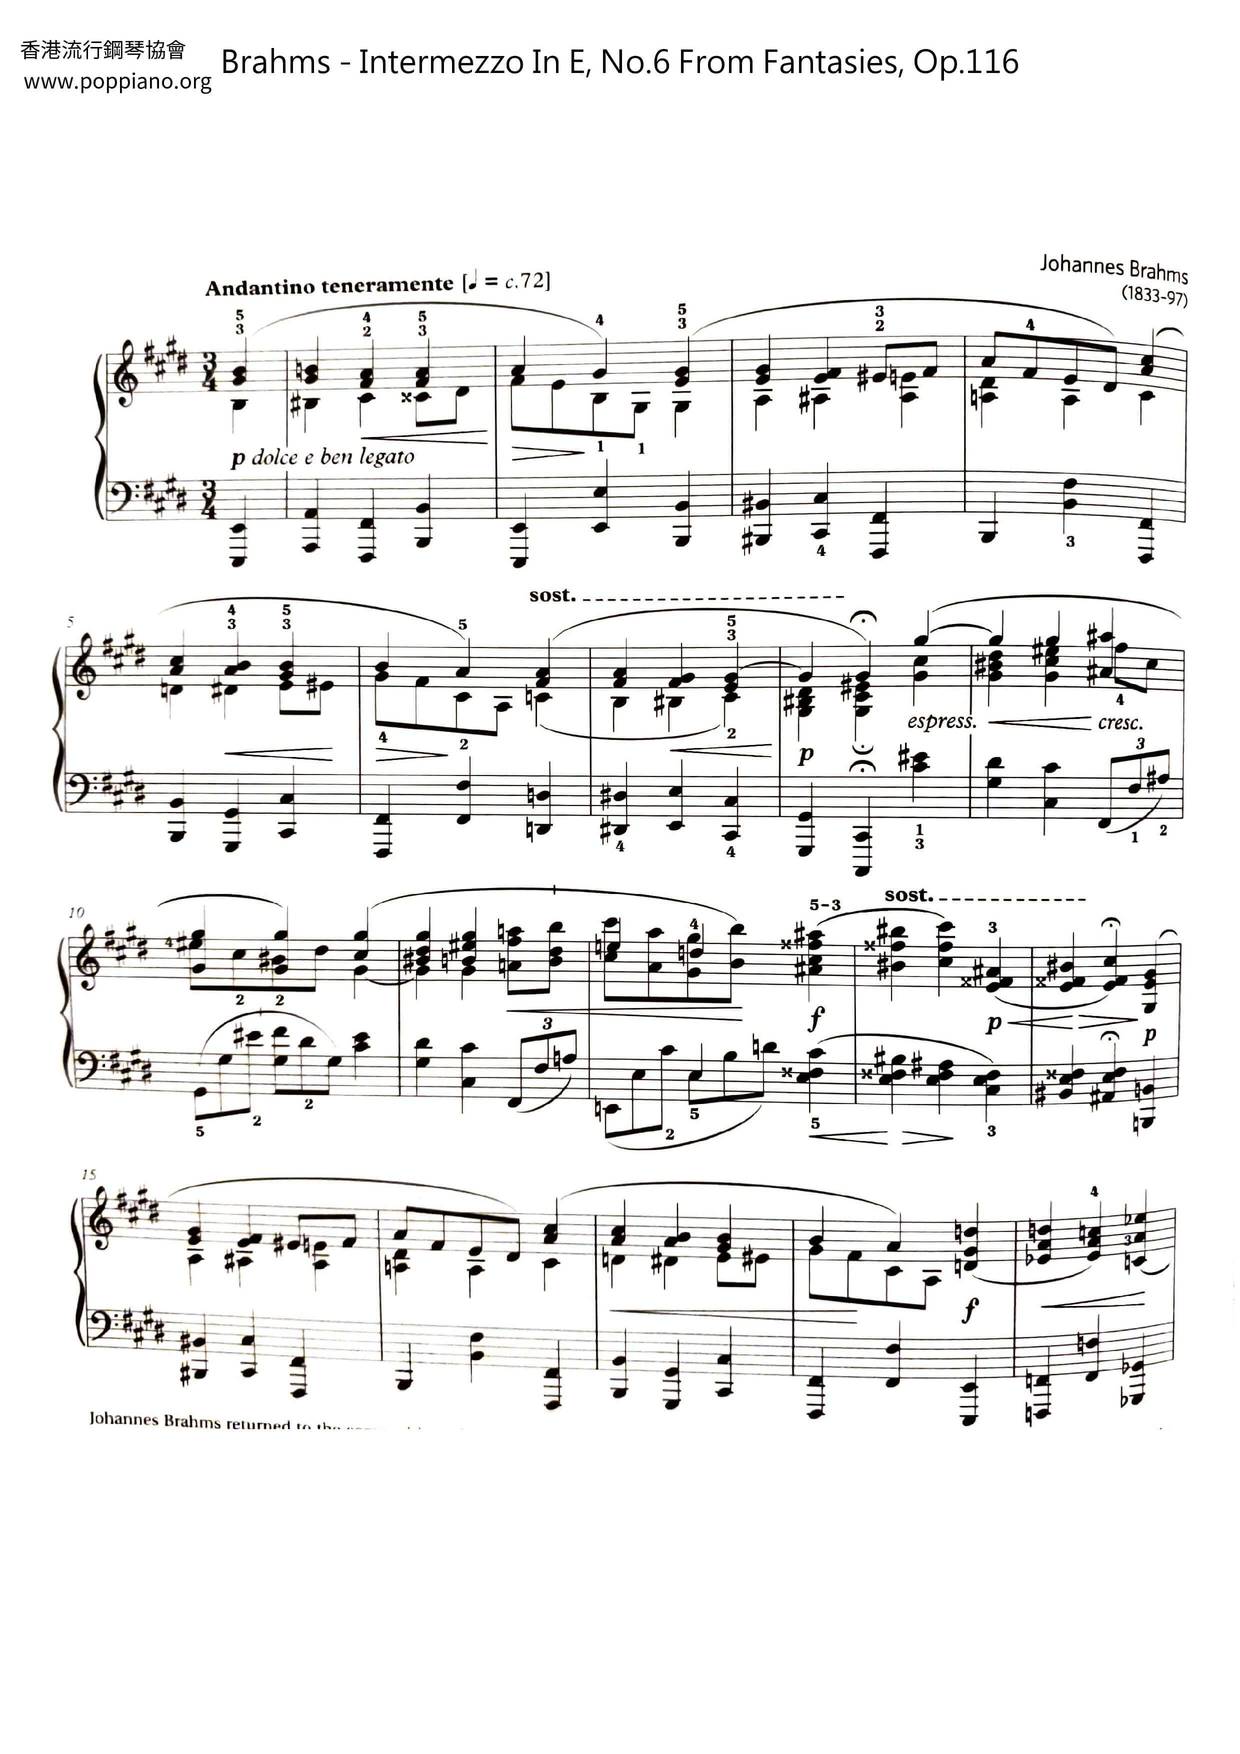 Intermezzo In E, No.6 From Fantasies, Op.116ピアノ譜